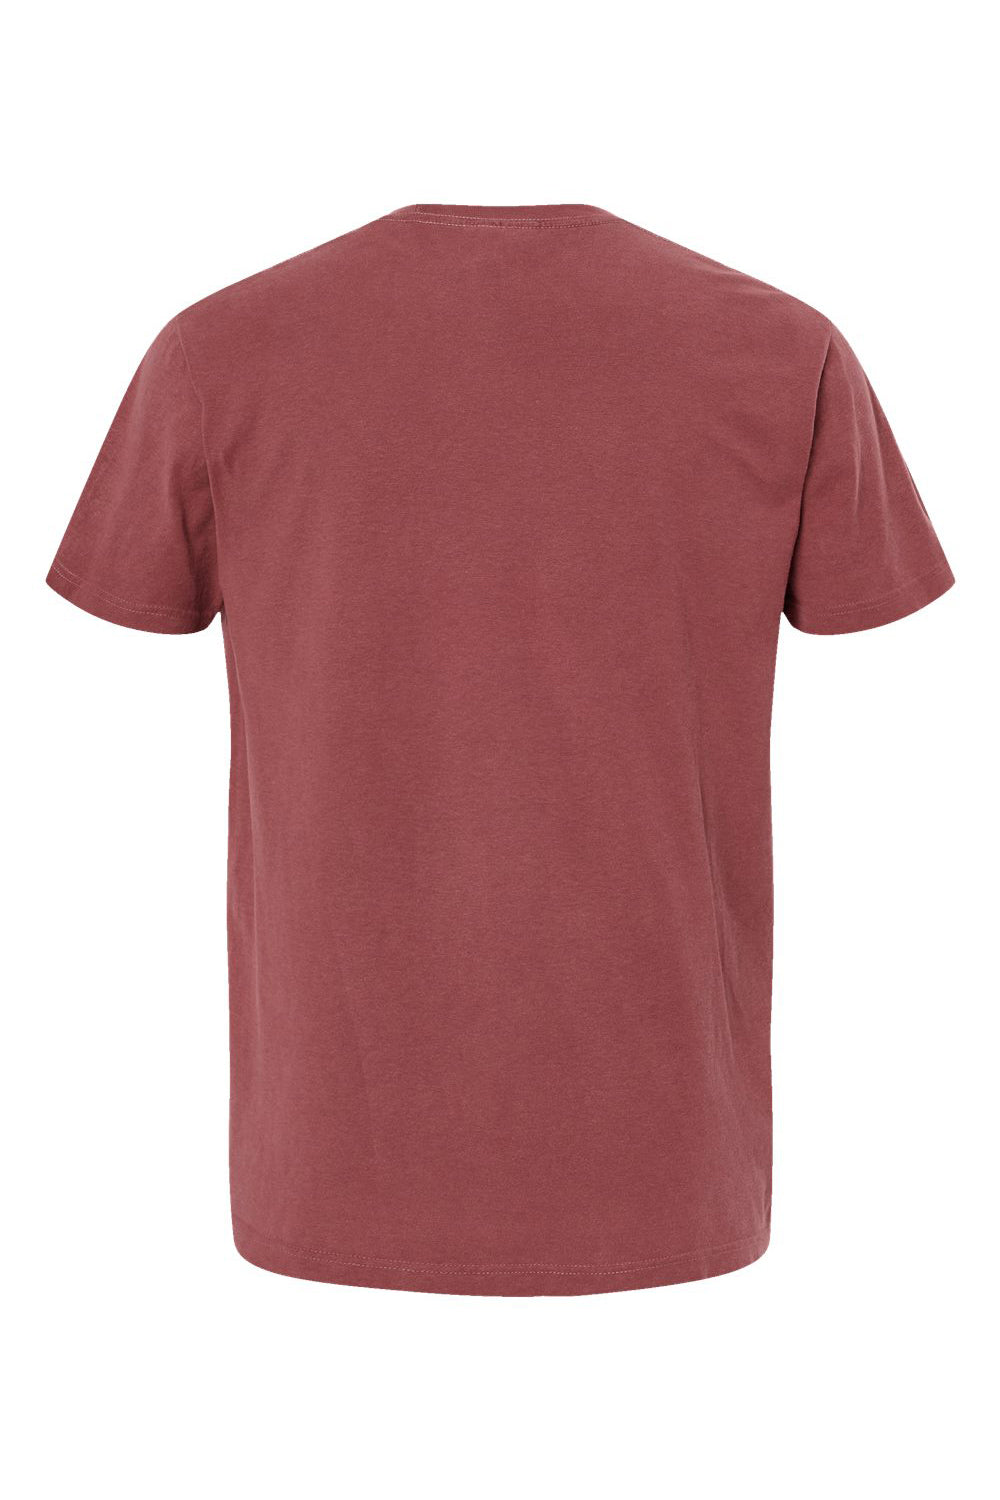 M&O 6500M Mens Vintage Garment Dyed Short Sleeve Crewneck T-Shirt Brick Red Flat Back